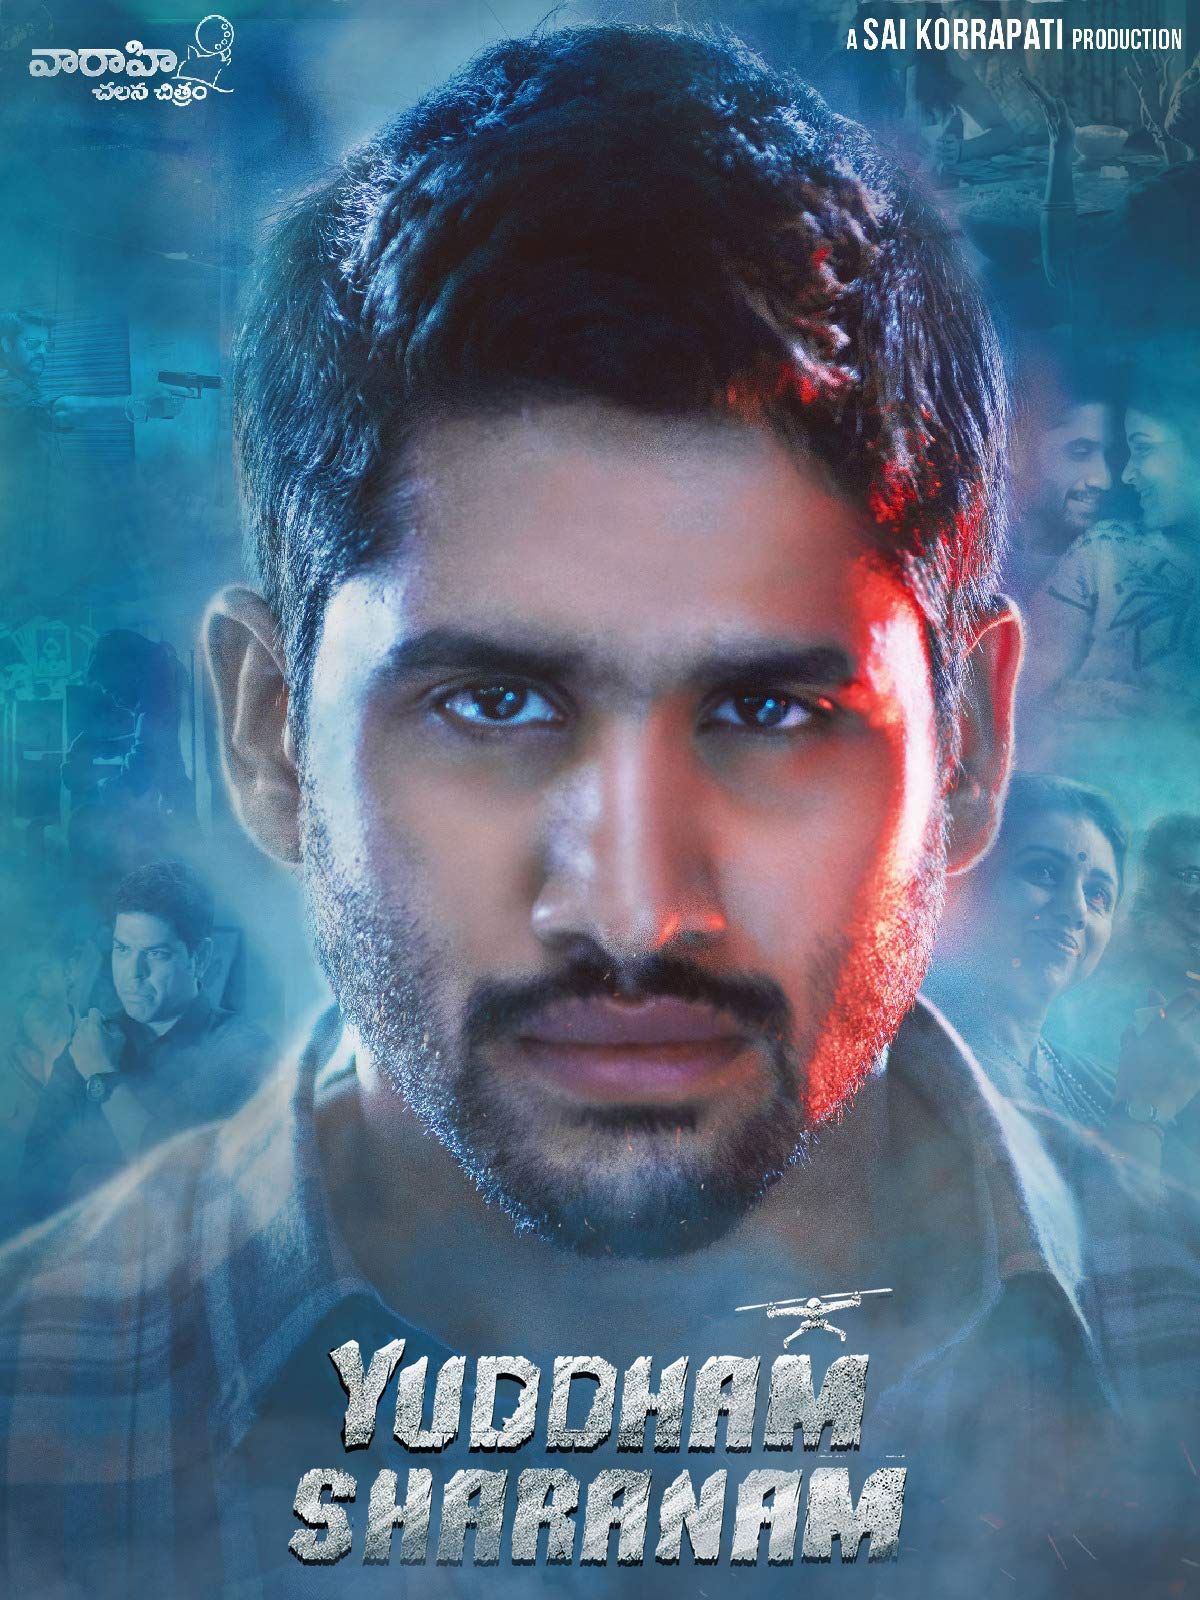 Yuddham Sharanam (2017) Hindi Dubbed HDRip download full movie